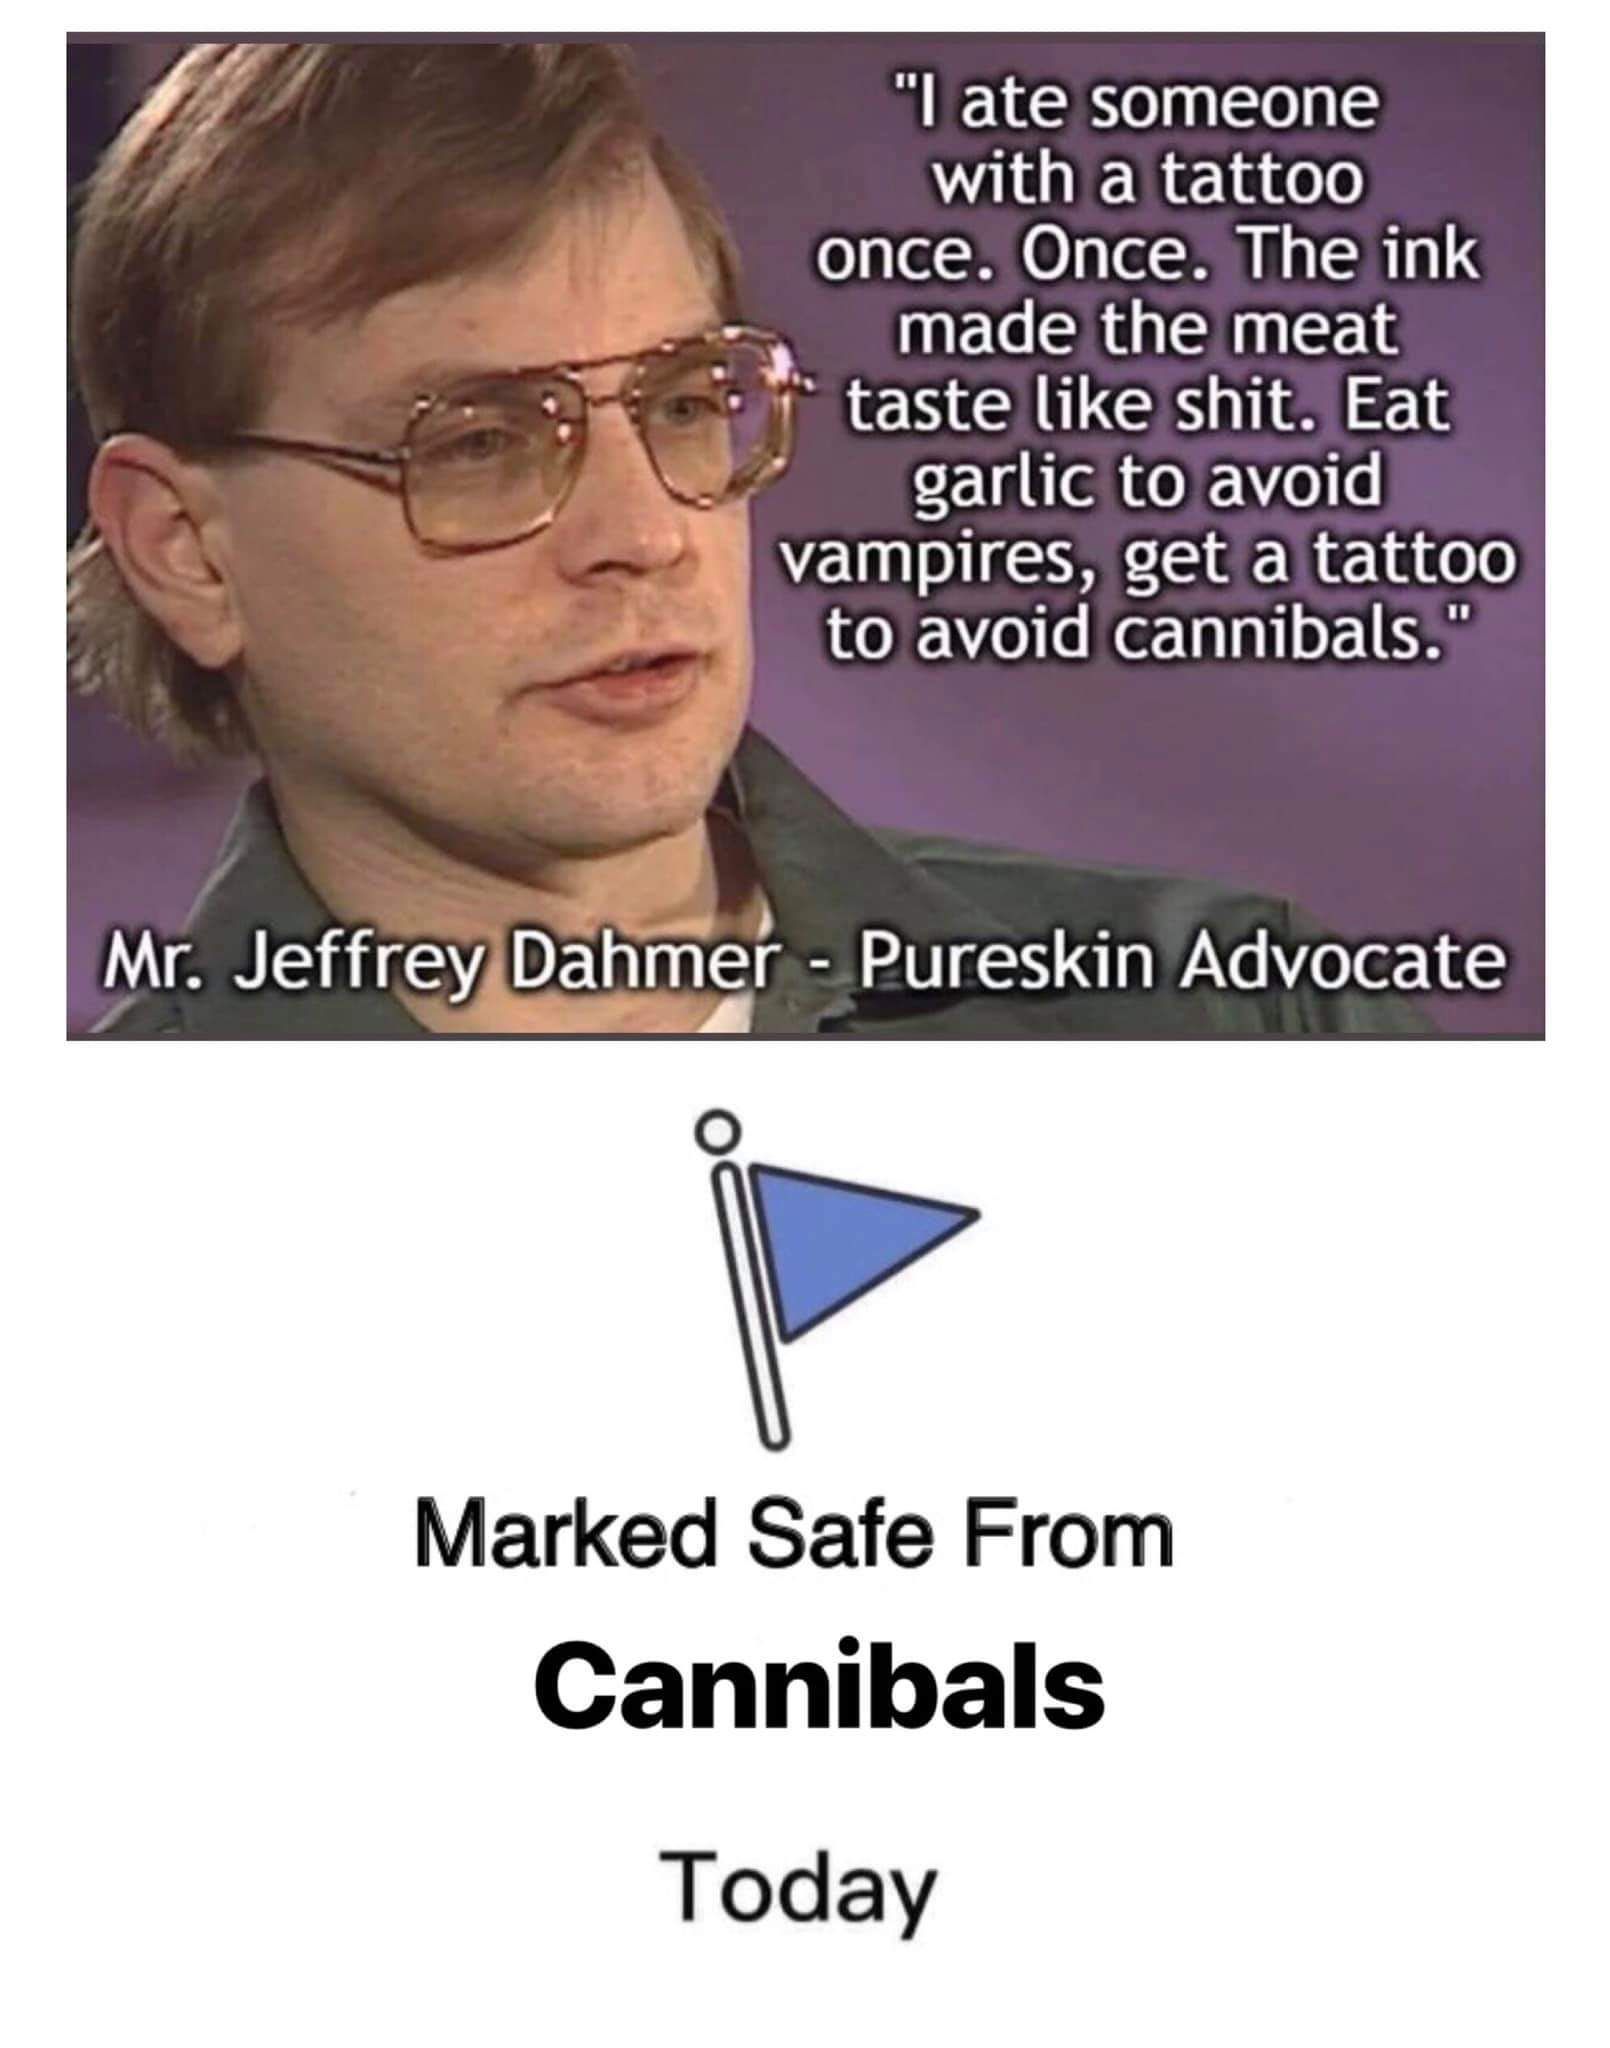 Avoid cannibals